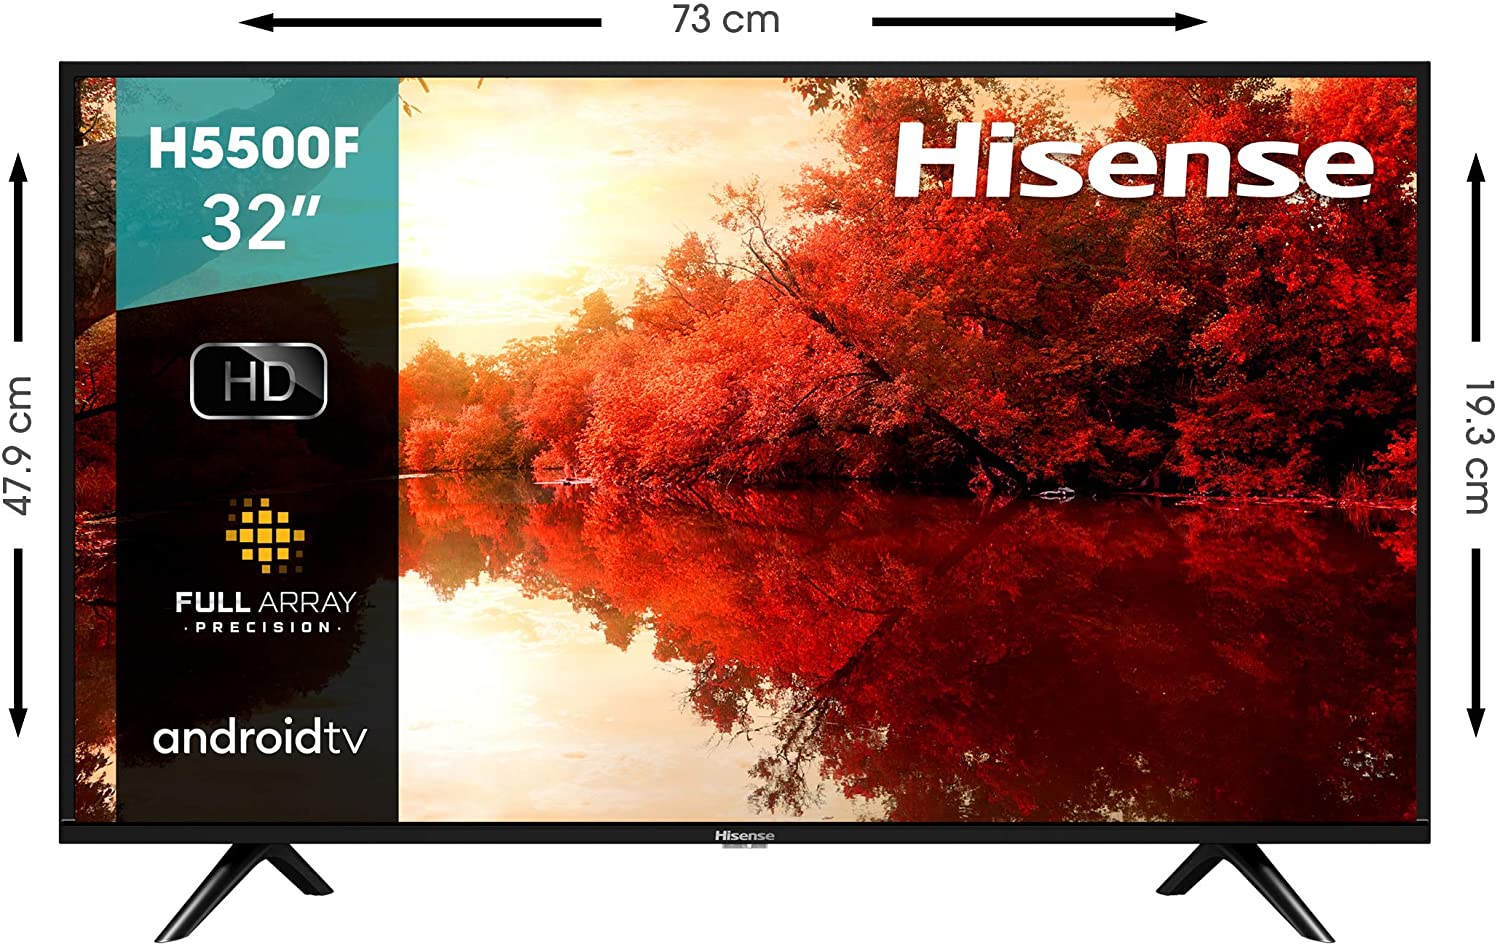 2019 Hisense 32H5590F 32-inch 720p Android Smart LED TV 